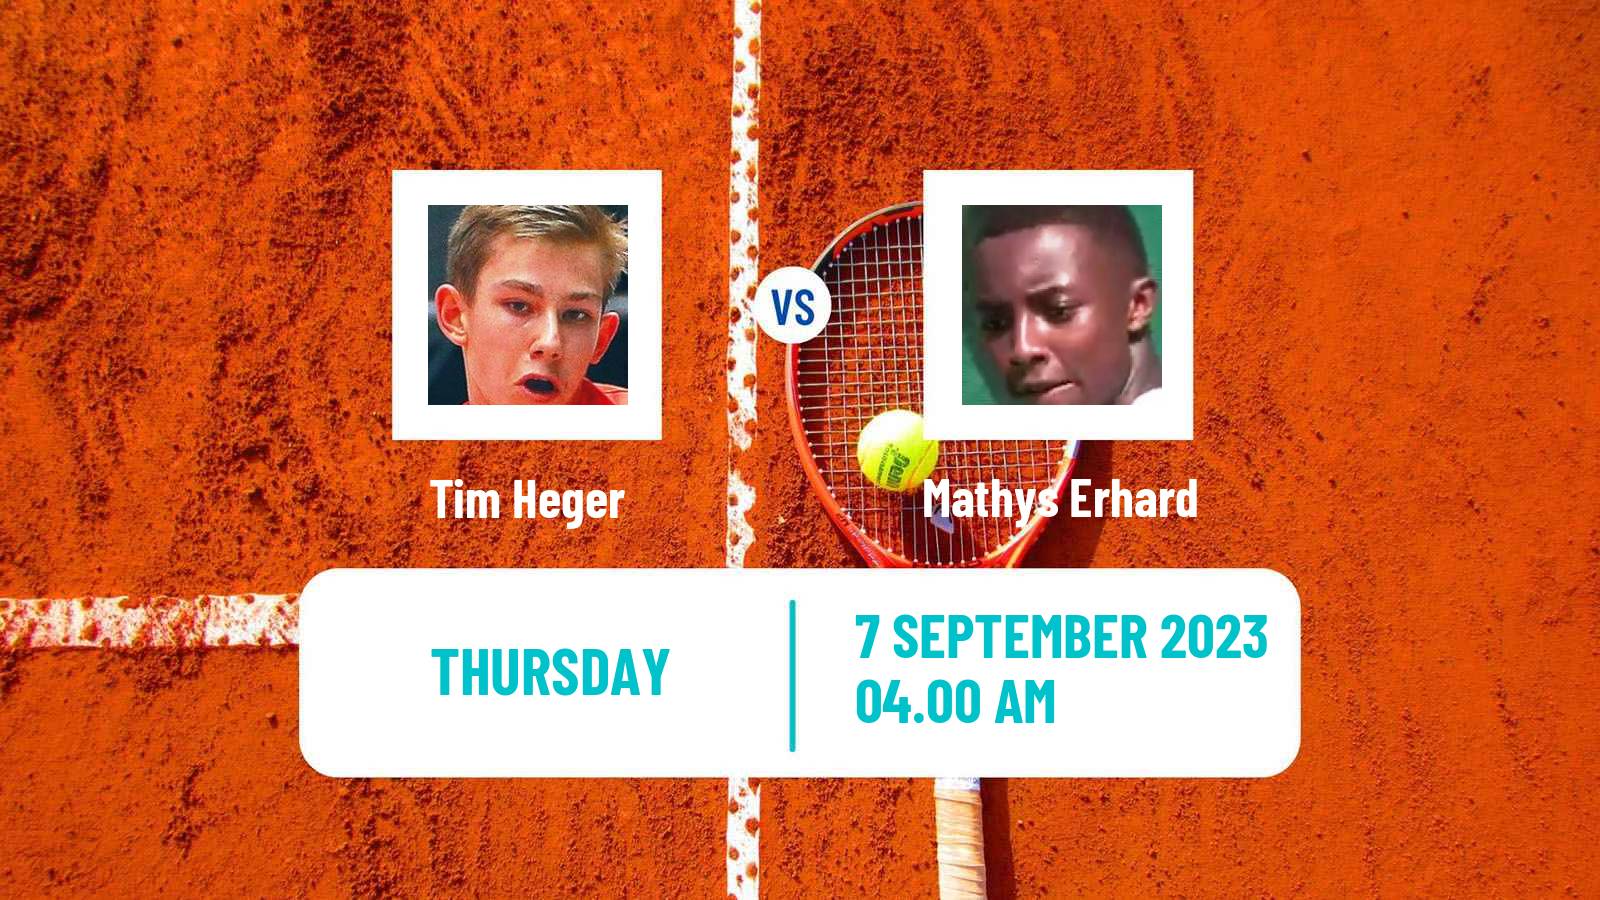 Tennis ITF M25 MarIBOr 2 Men Tim Heger - Mathys Erhard